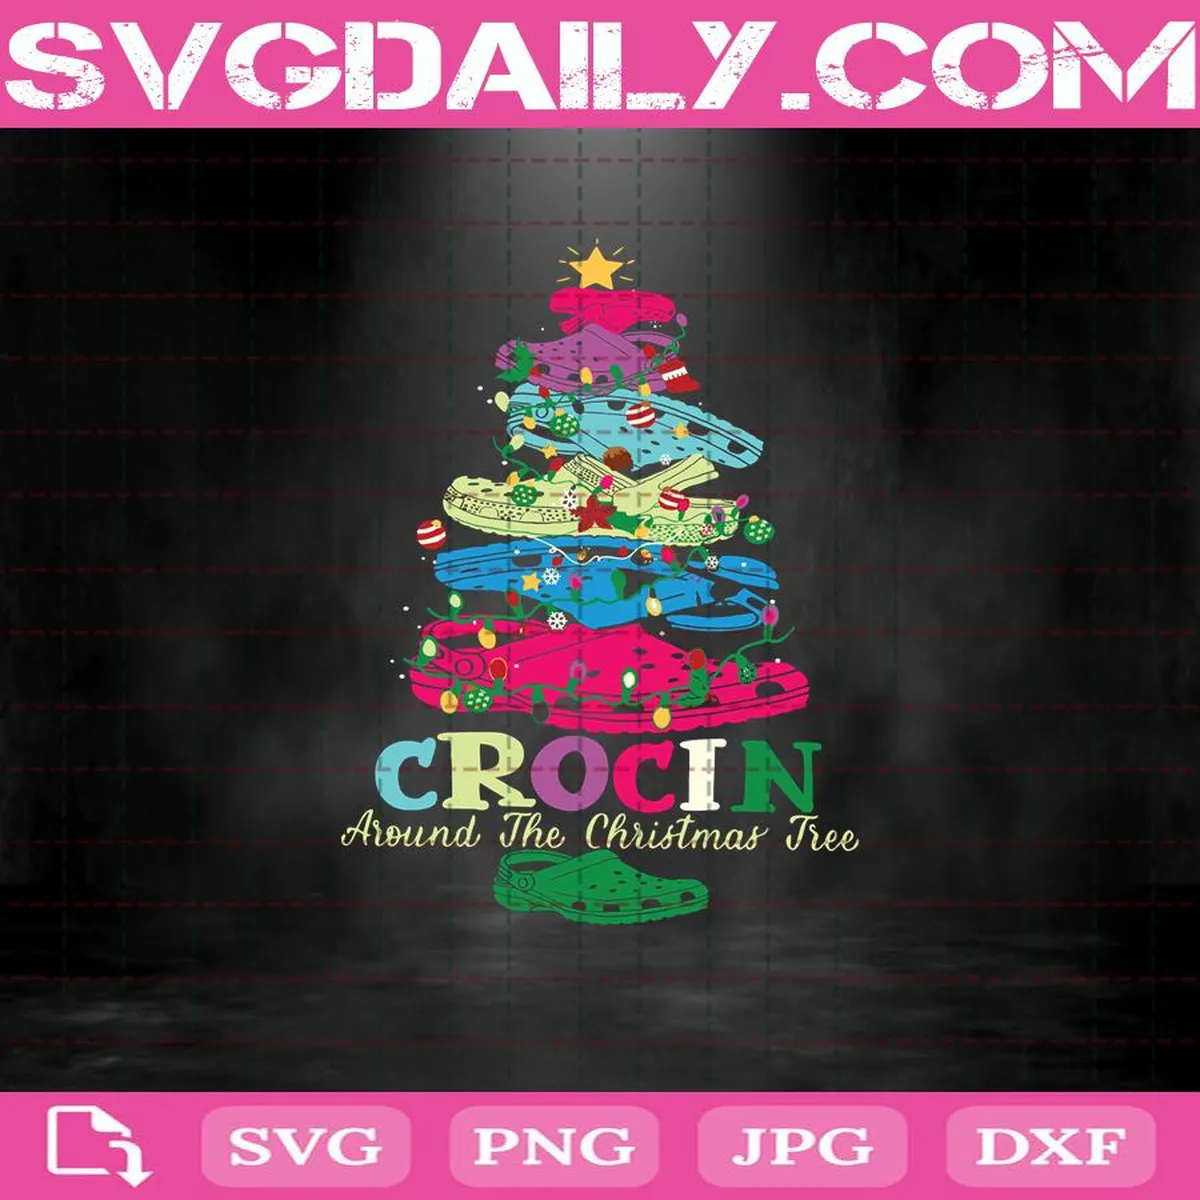 Crocs Sandal Svg, Crocin Around The Christmas Tree Svg, Christmas Svg, Christmas Gift Svg, Svg Png Dxf Eps AI Instant Download